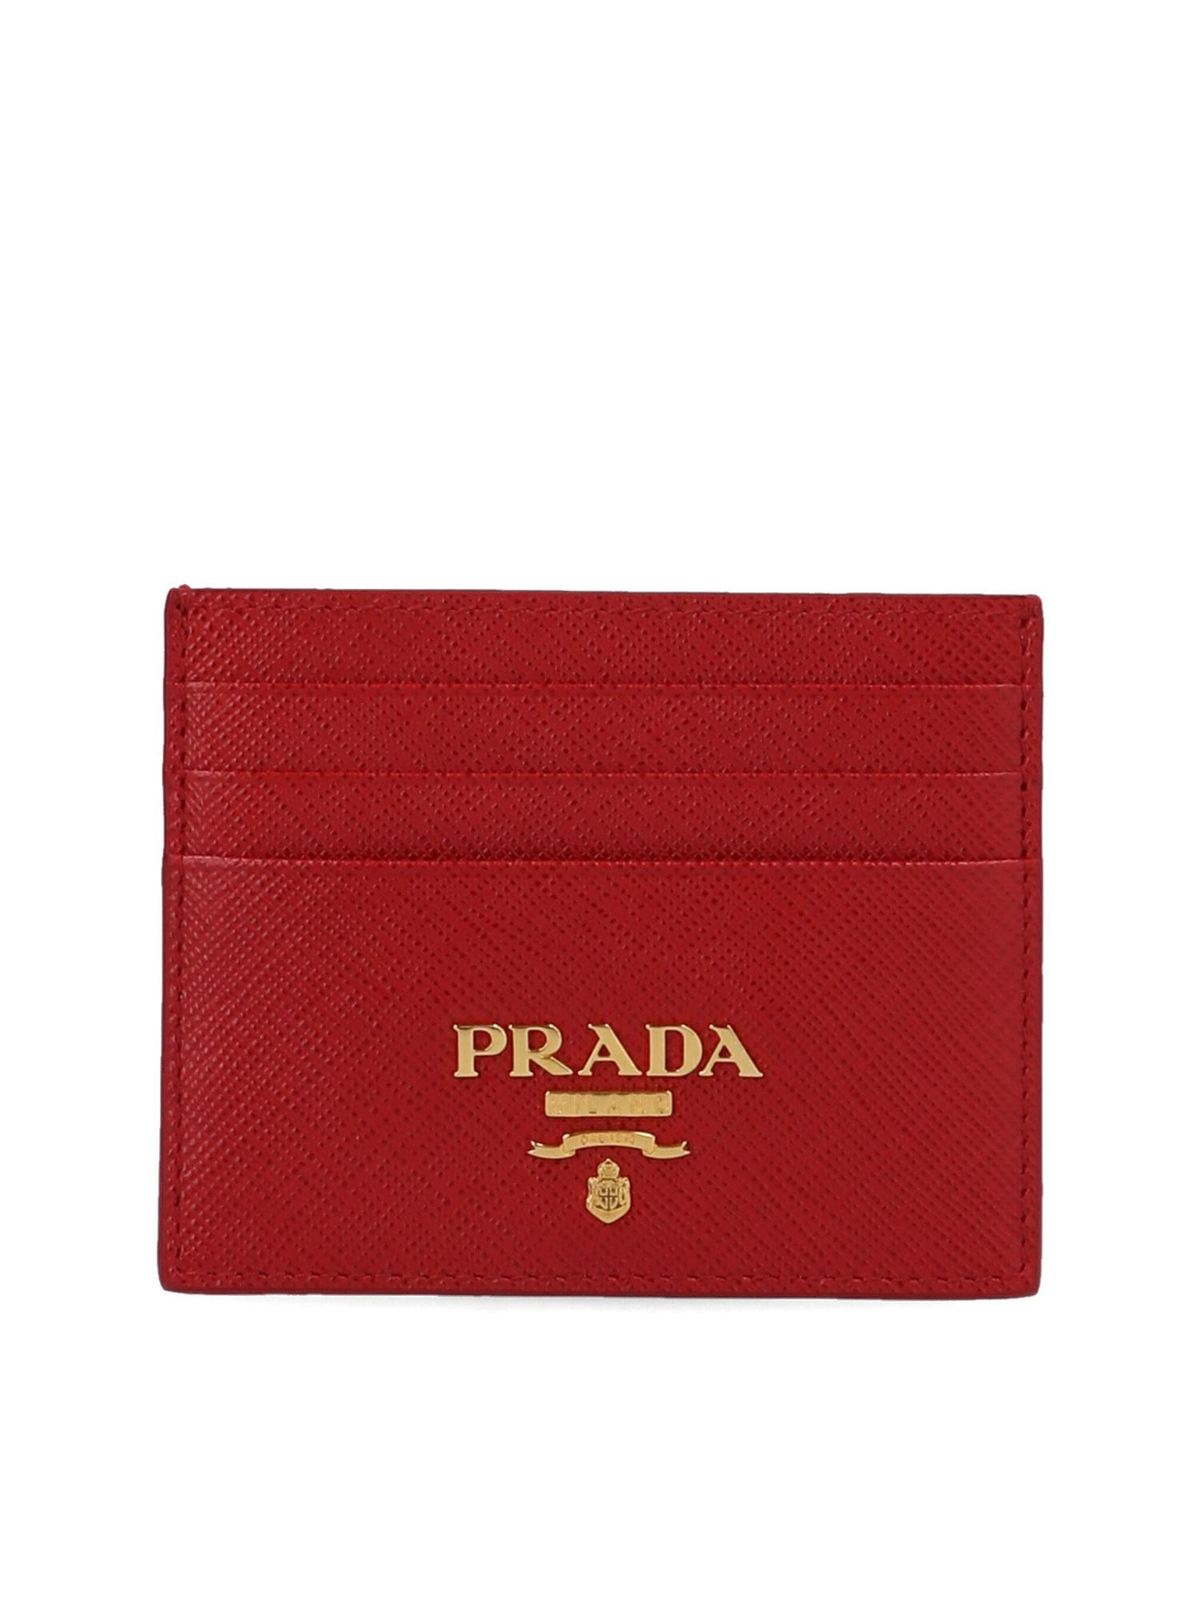 red prada card holder